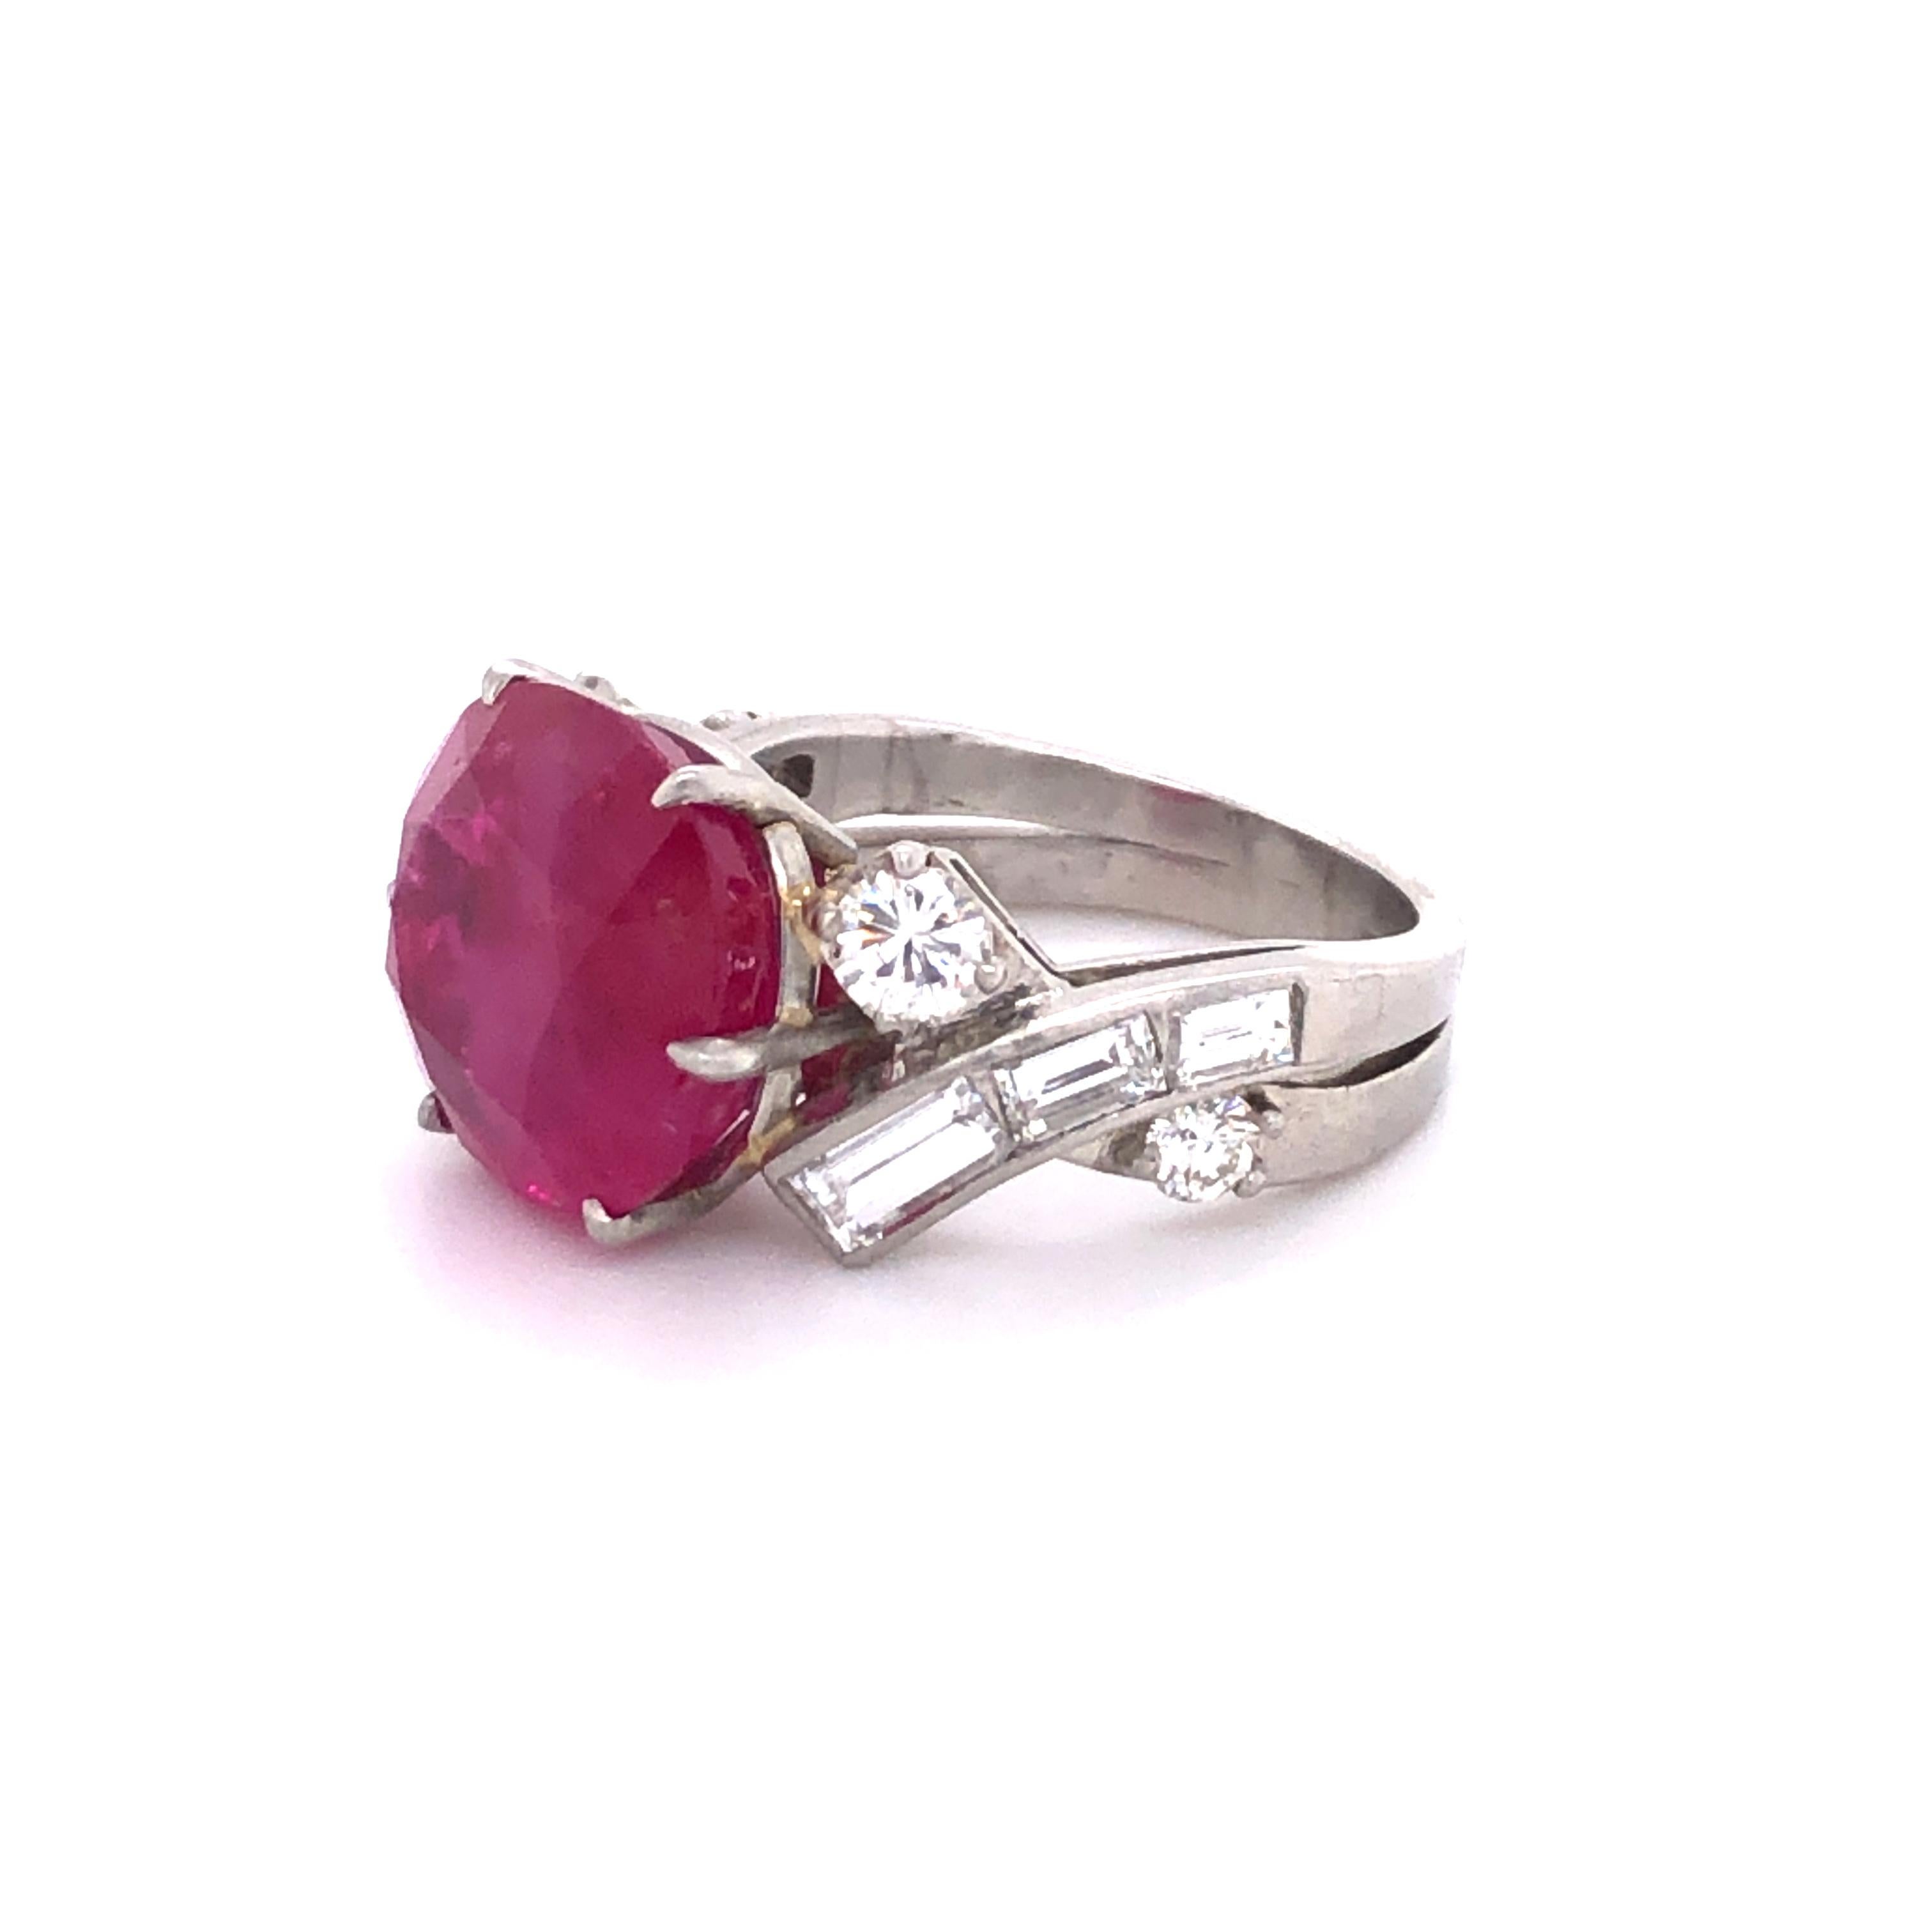 Modern Stunning 10.40 Carat Burma Ruby and Diamond Ring in Platinum 950